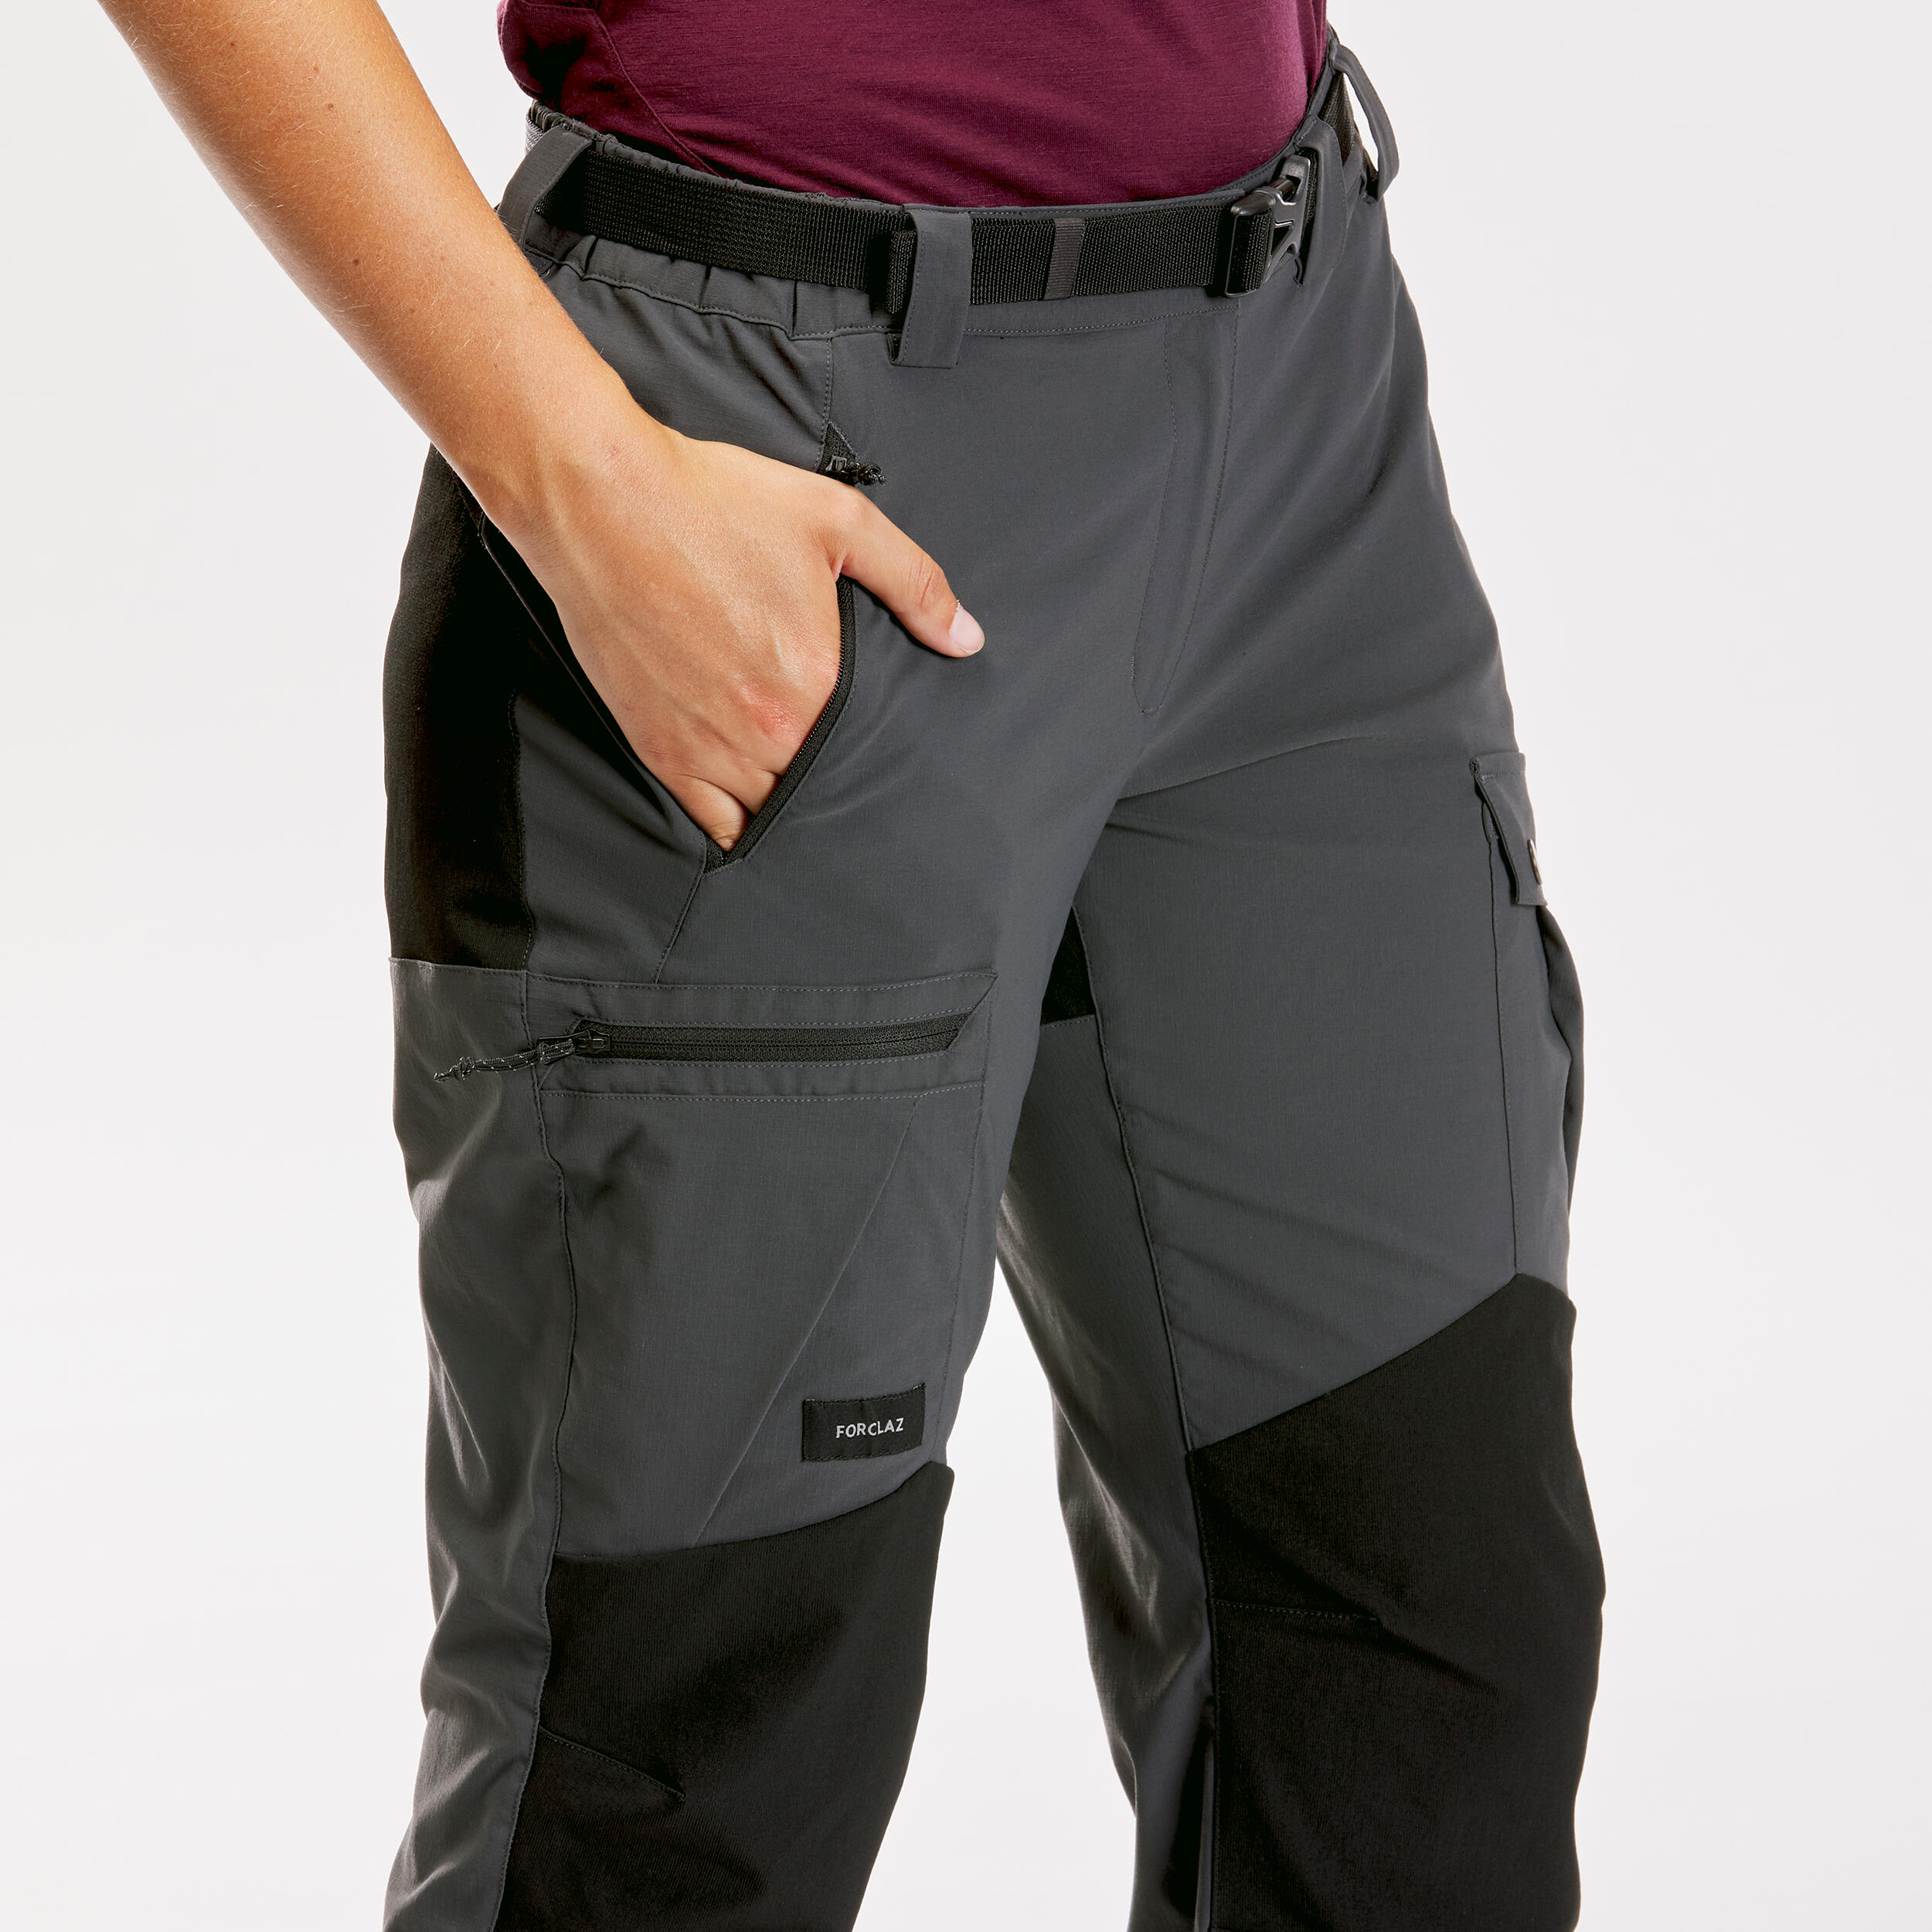 Forclaz Women's MT100 2-in-1 Zip-Off Hiking Pants | Hiking pants, Pants,  Women